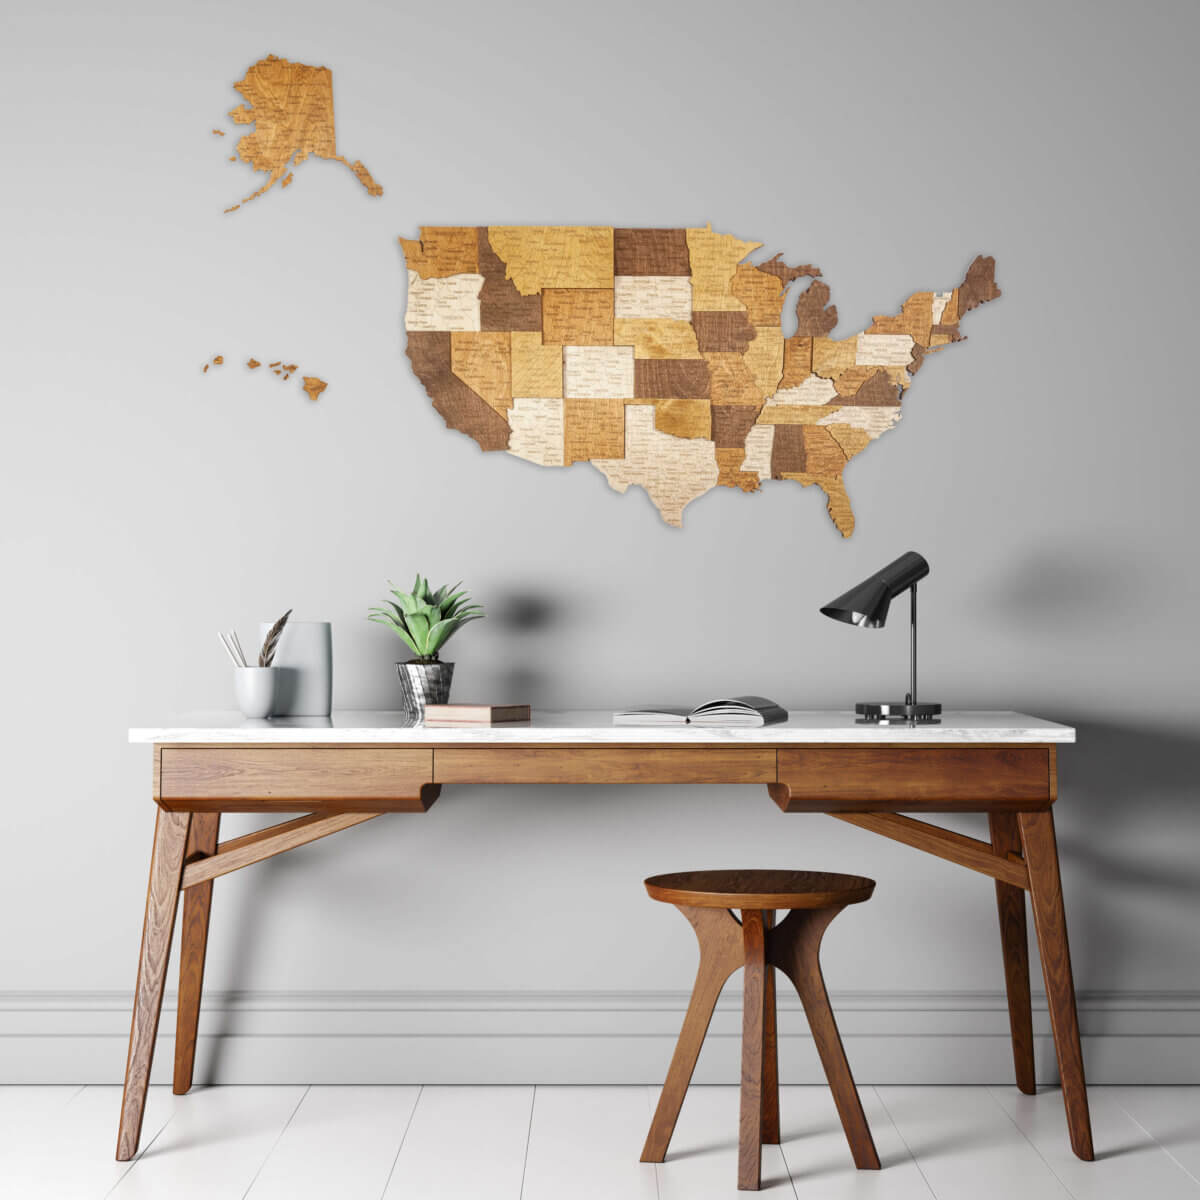 3D-Holzkarte der Vereinigten Staaten